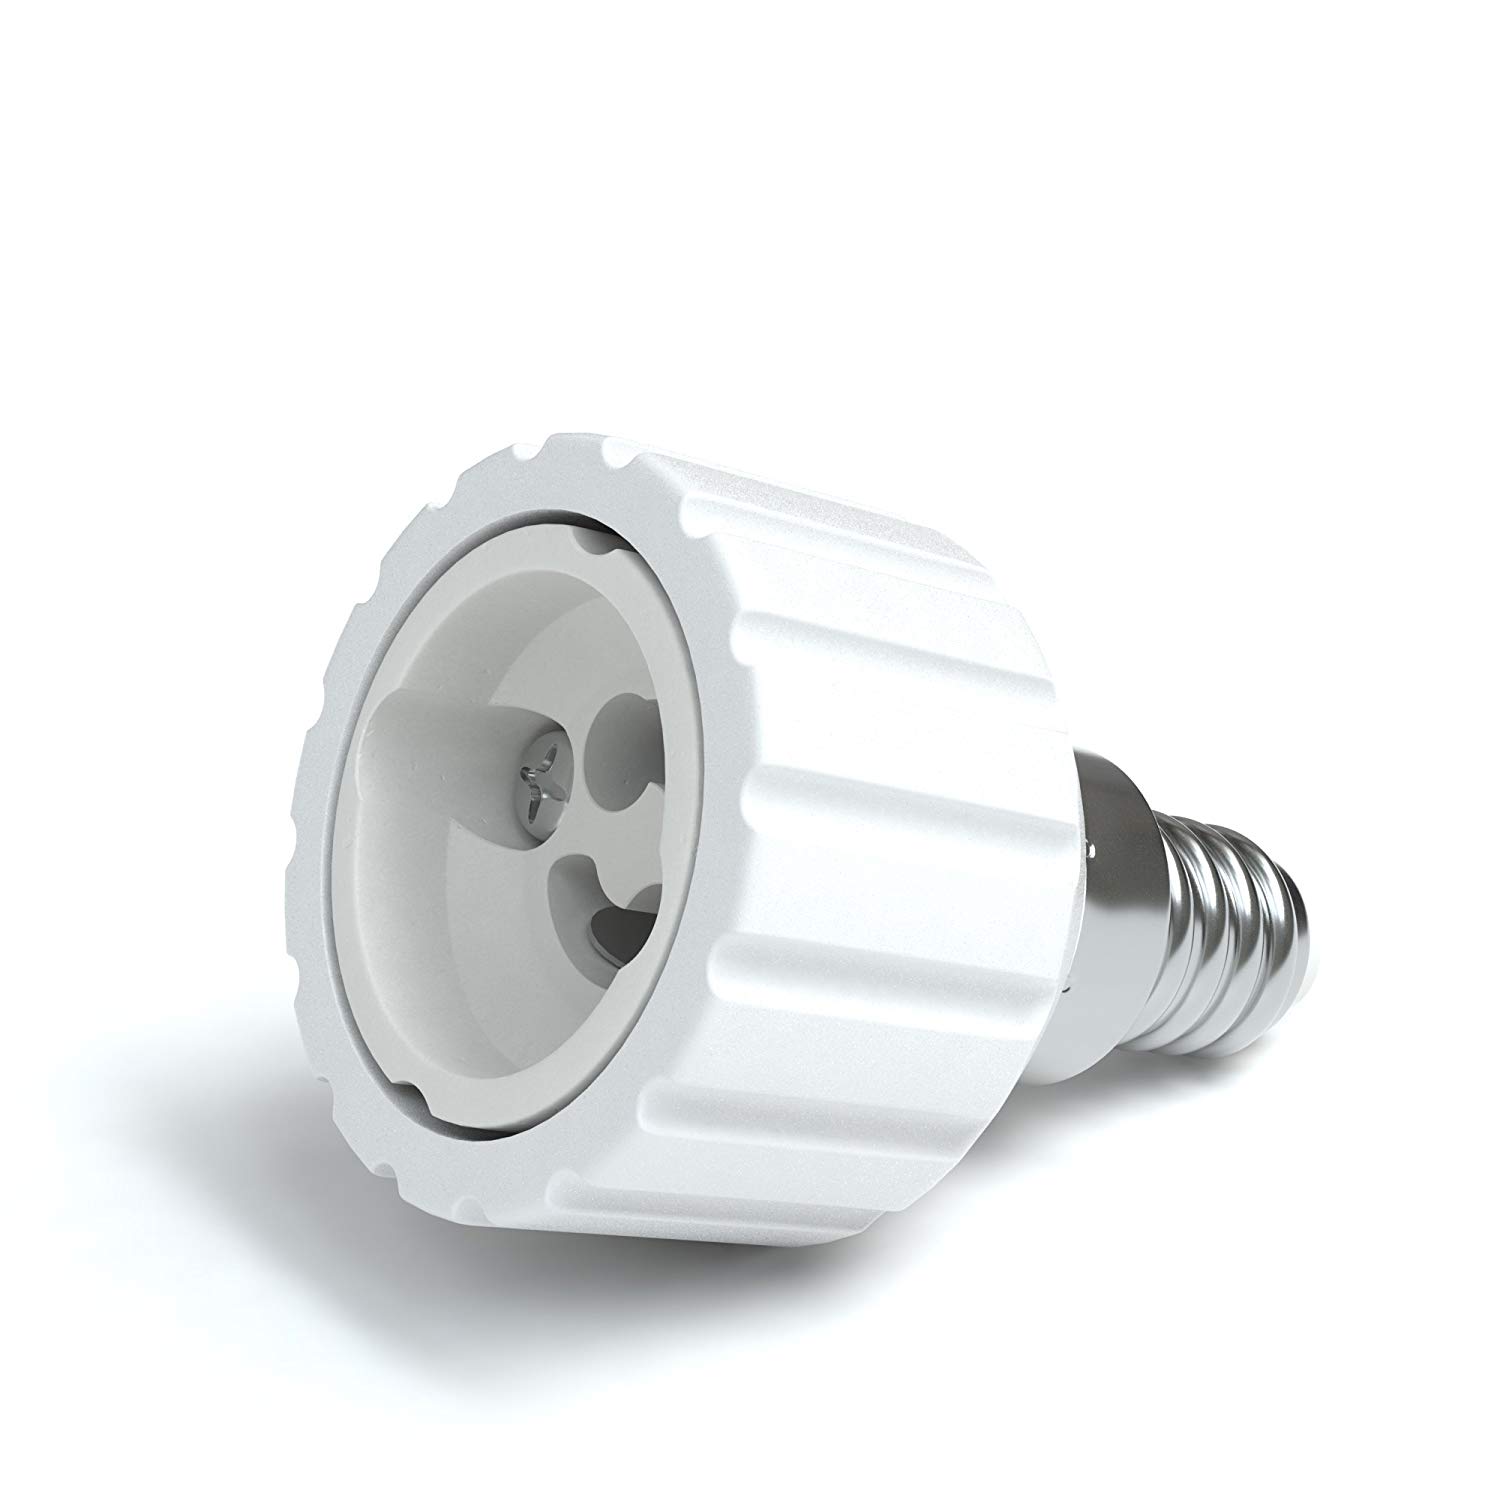 5x Lampensockel Adapter E14 auf GU10 Fassung Lampe Leuchte Licht Sockel 